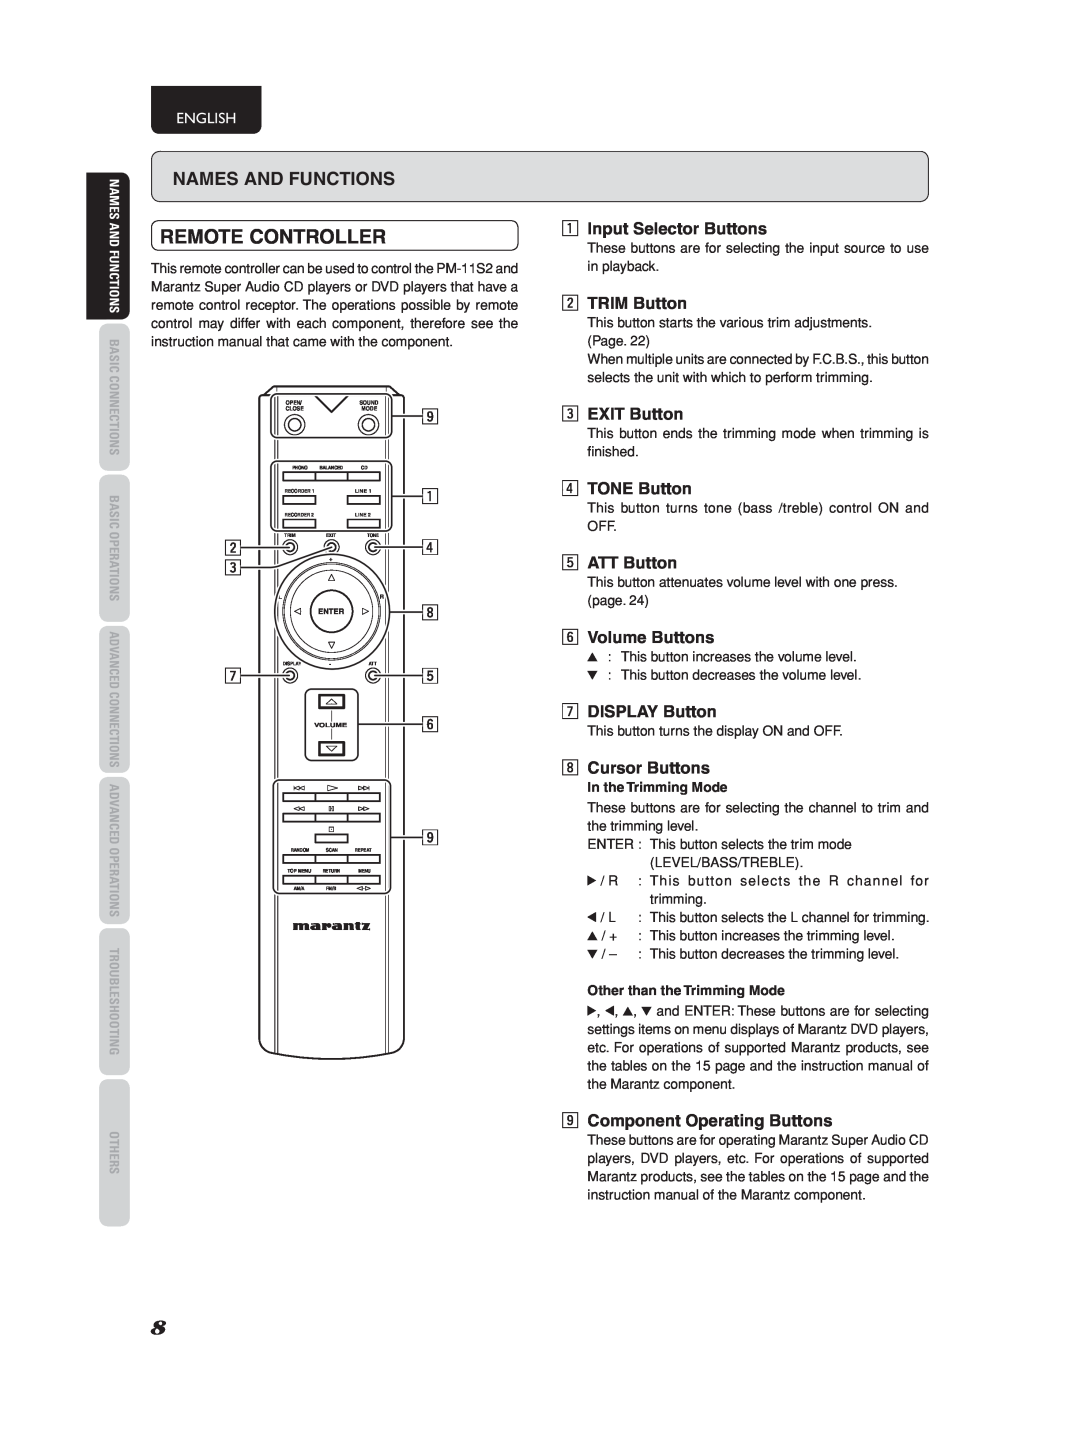 Marantz PM-11S2 manual Remote Controller, zInput Selector Buttons, xTRIM Button, cEXIT Button, v TONE Button, bATT Button 